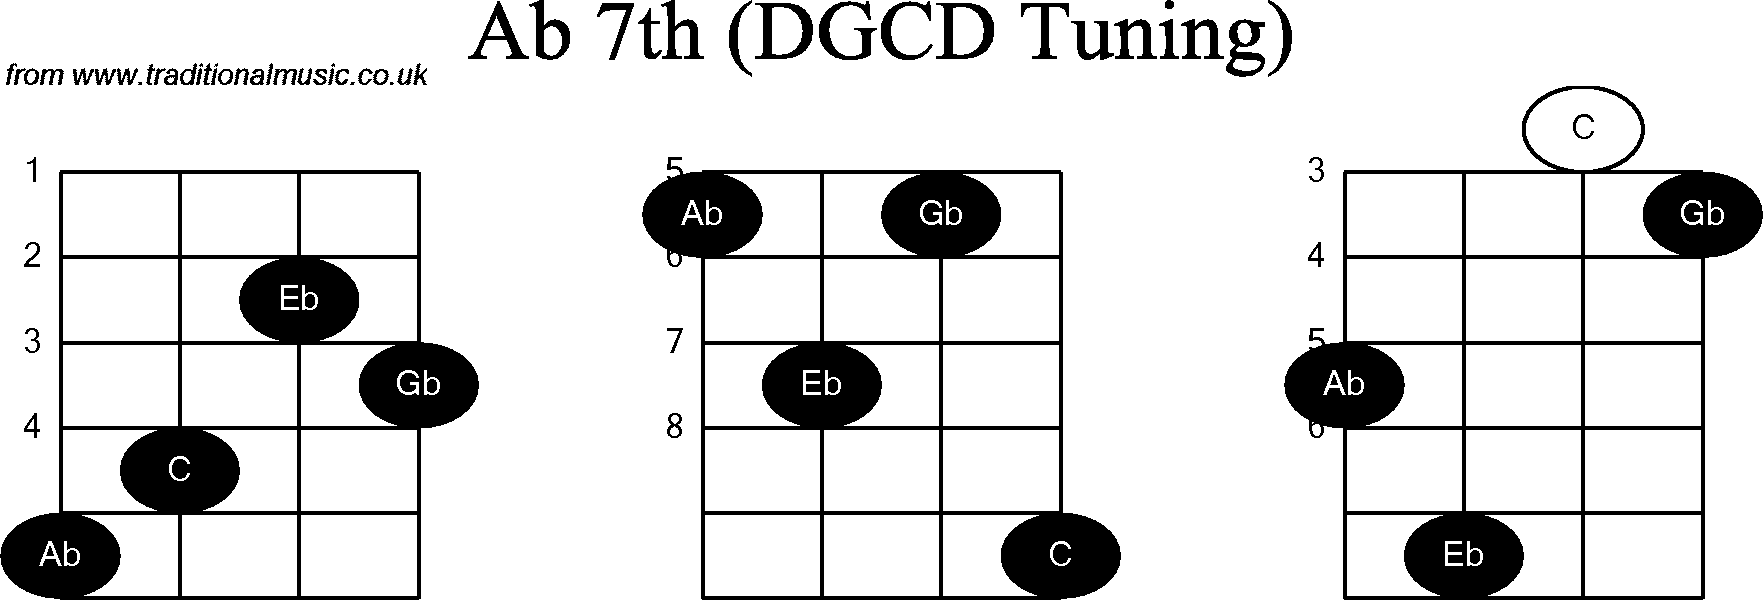 Chord diagrams for Banjo(G Modal) Ab7th